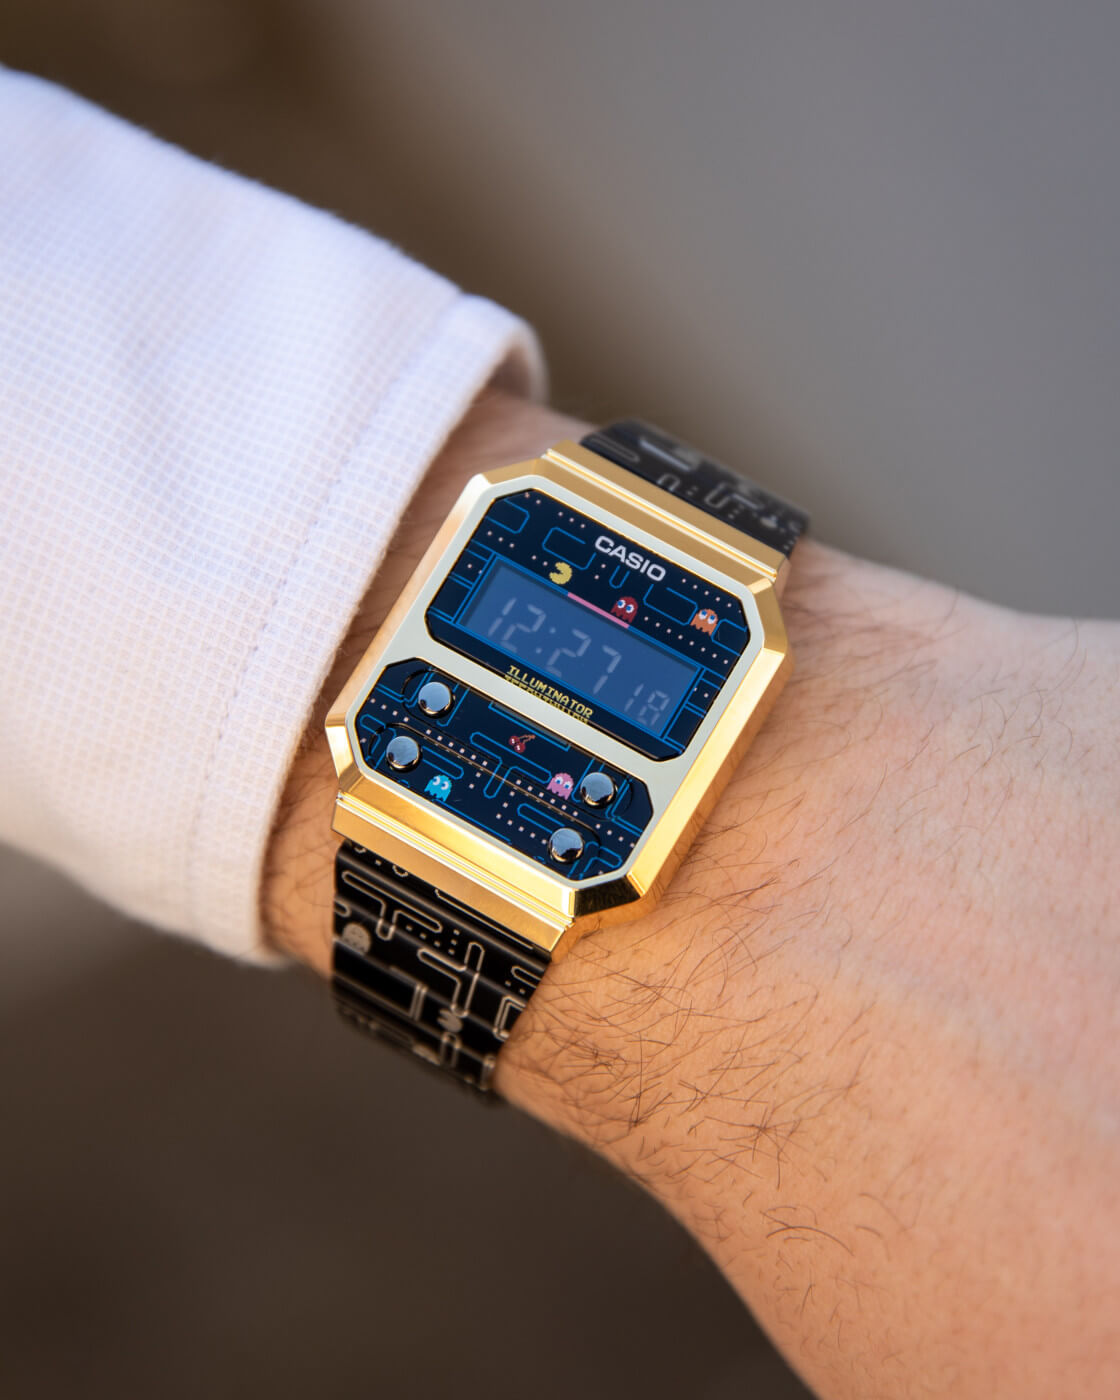 Pacman Casio watch on wrist